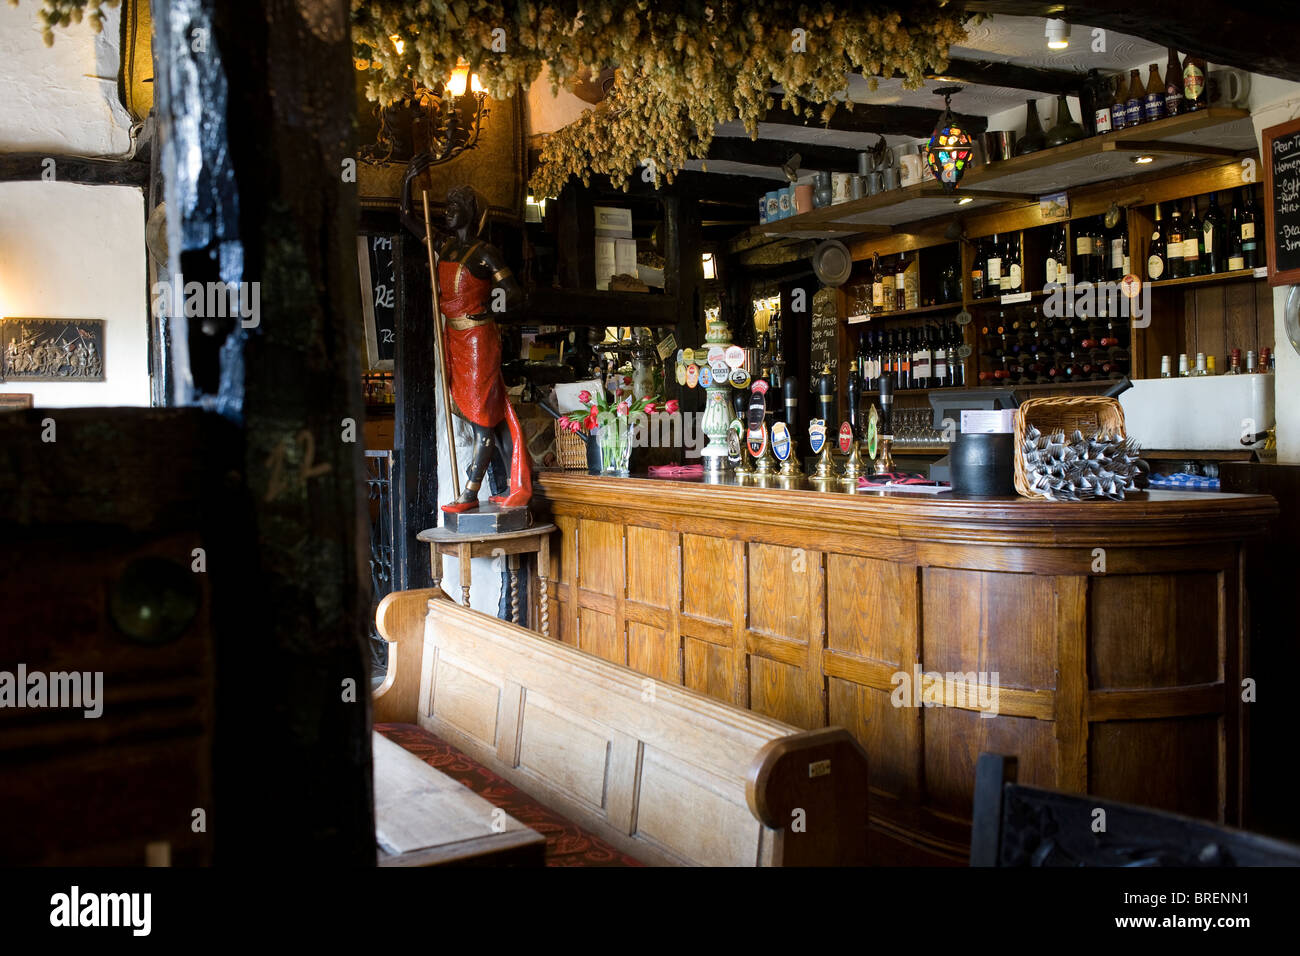 The Royal Standard Pub near London. The pub has a traditional seventeenth century theme. Stock Photo